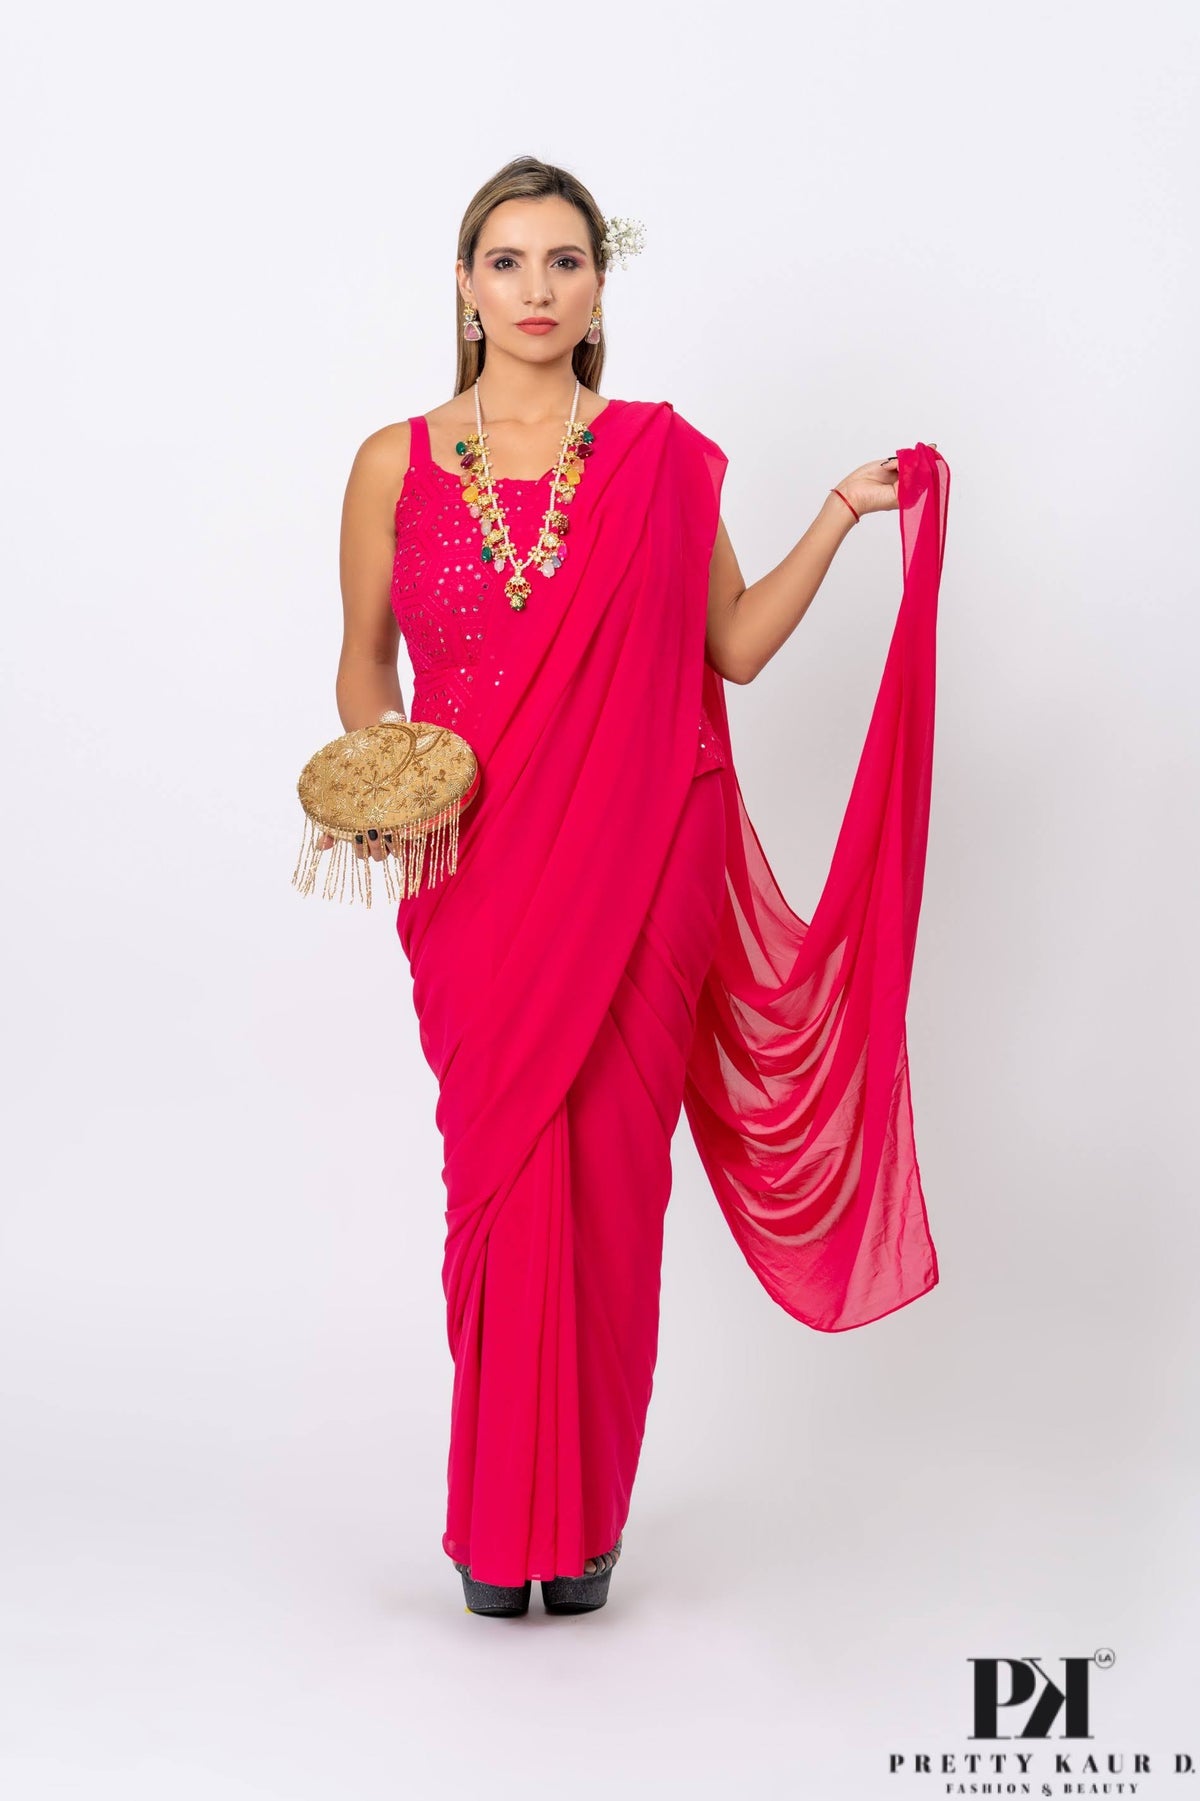 Pretty-Kaur-fashion-beauty-Red-Fuchsia-Gown-Saree-2